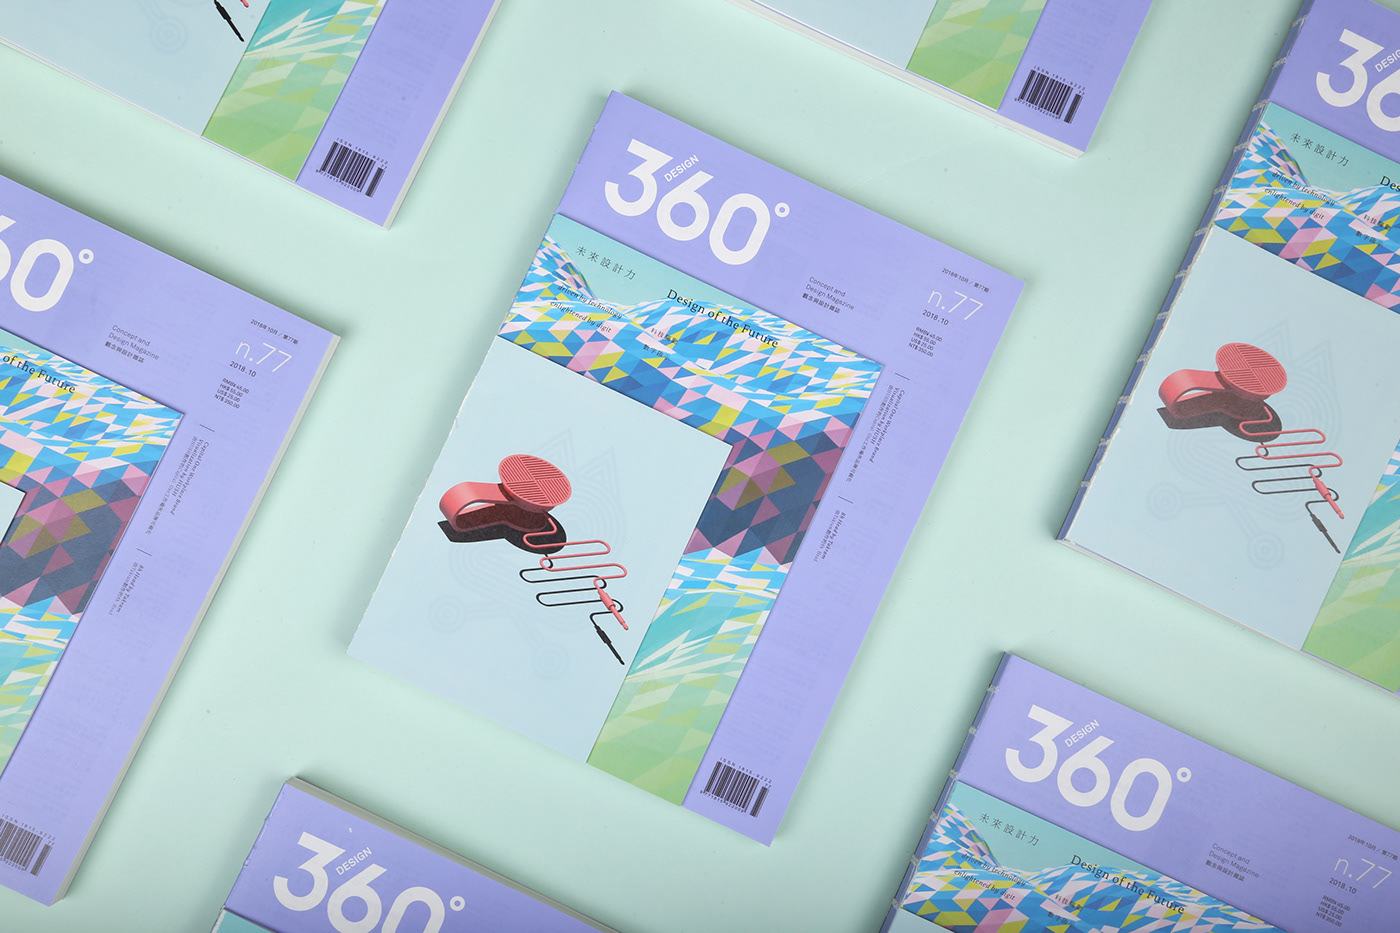 design360 design magazine editorial print Layout Technology digit Korean Design jagda